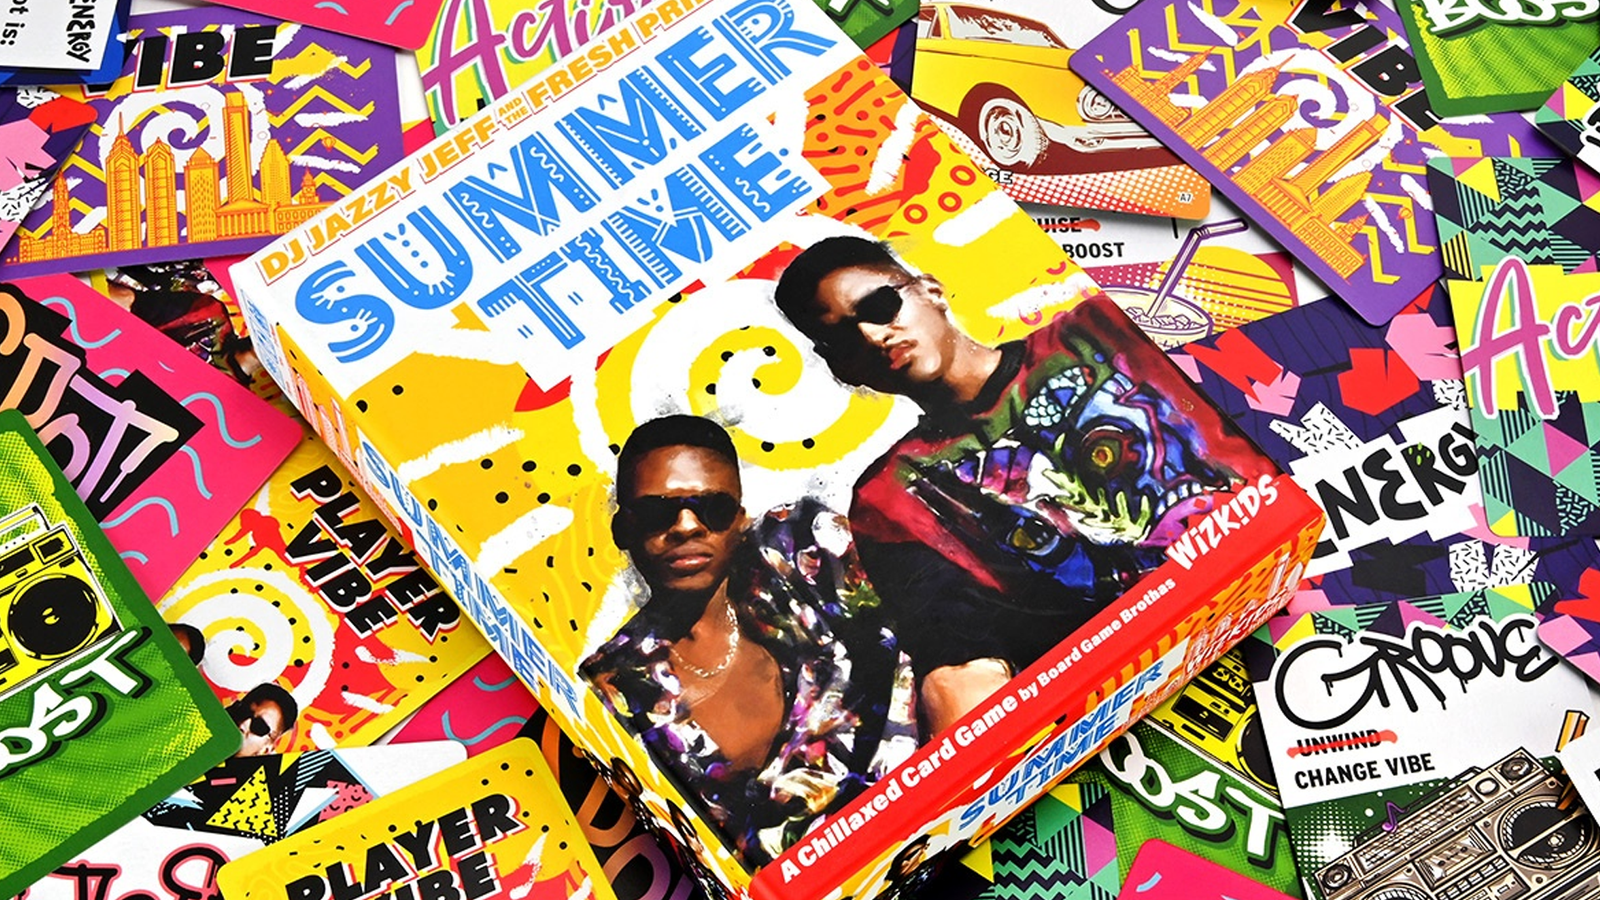 DJ Jazzy Jeff & The Fresh Prince - Summertime 